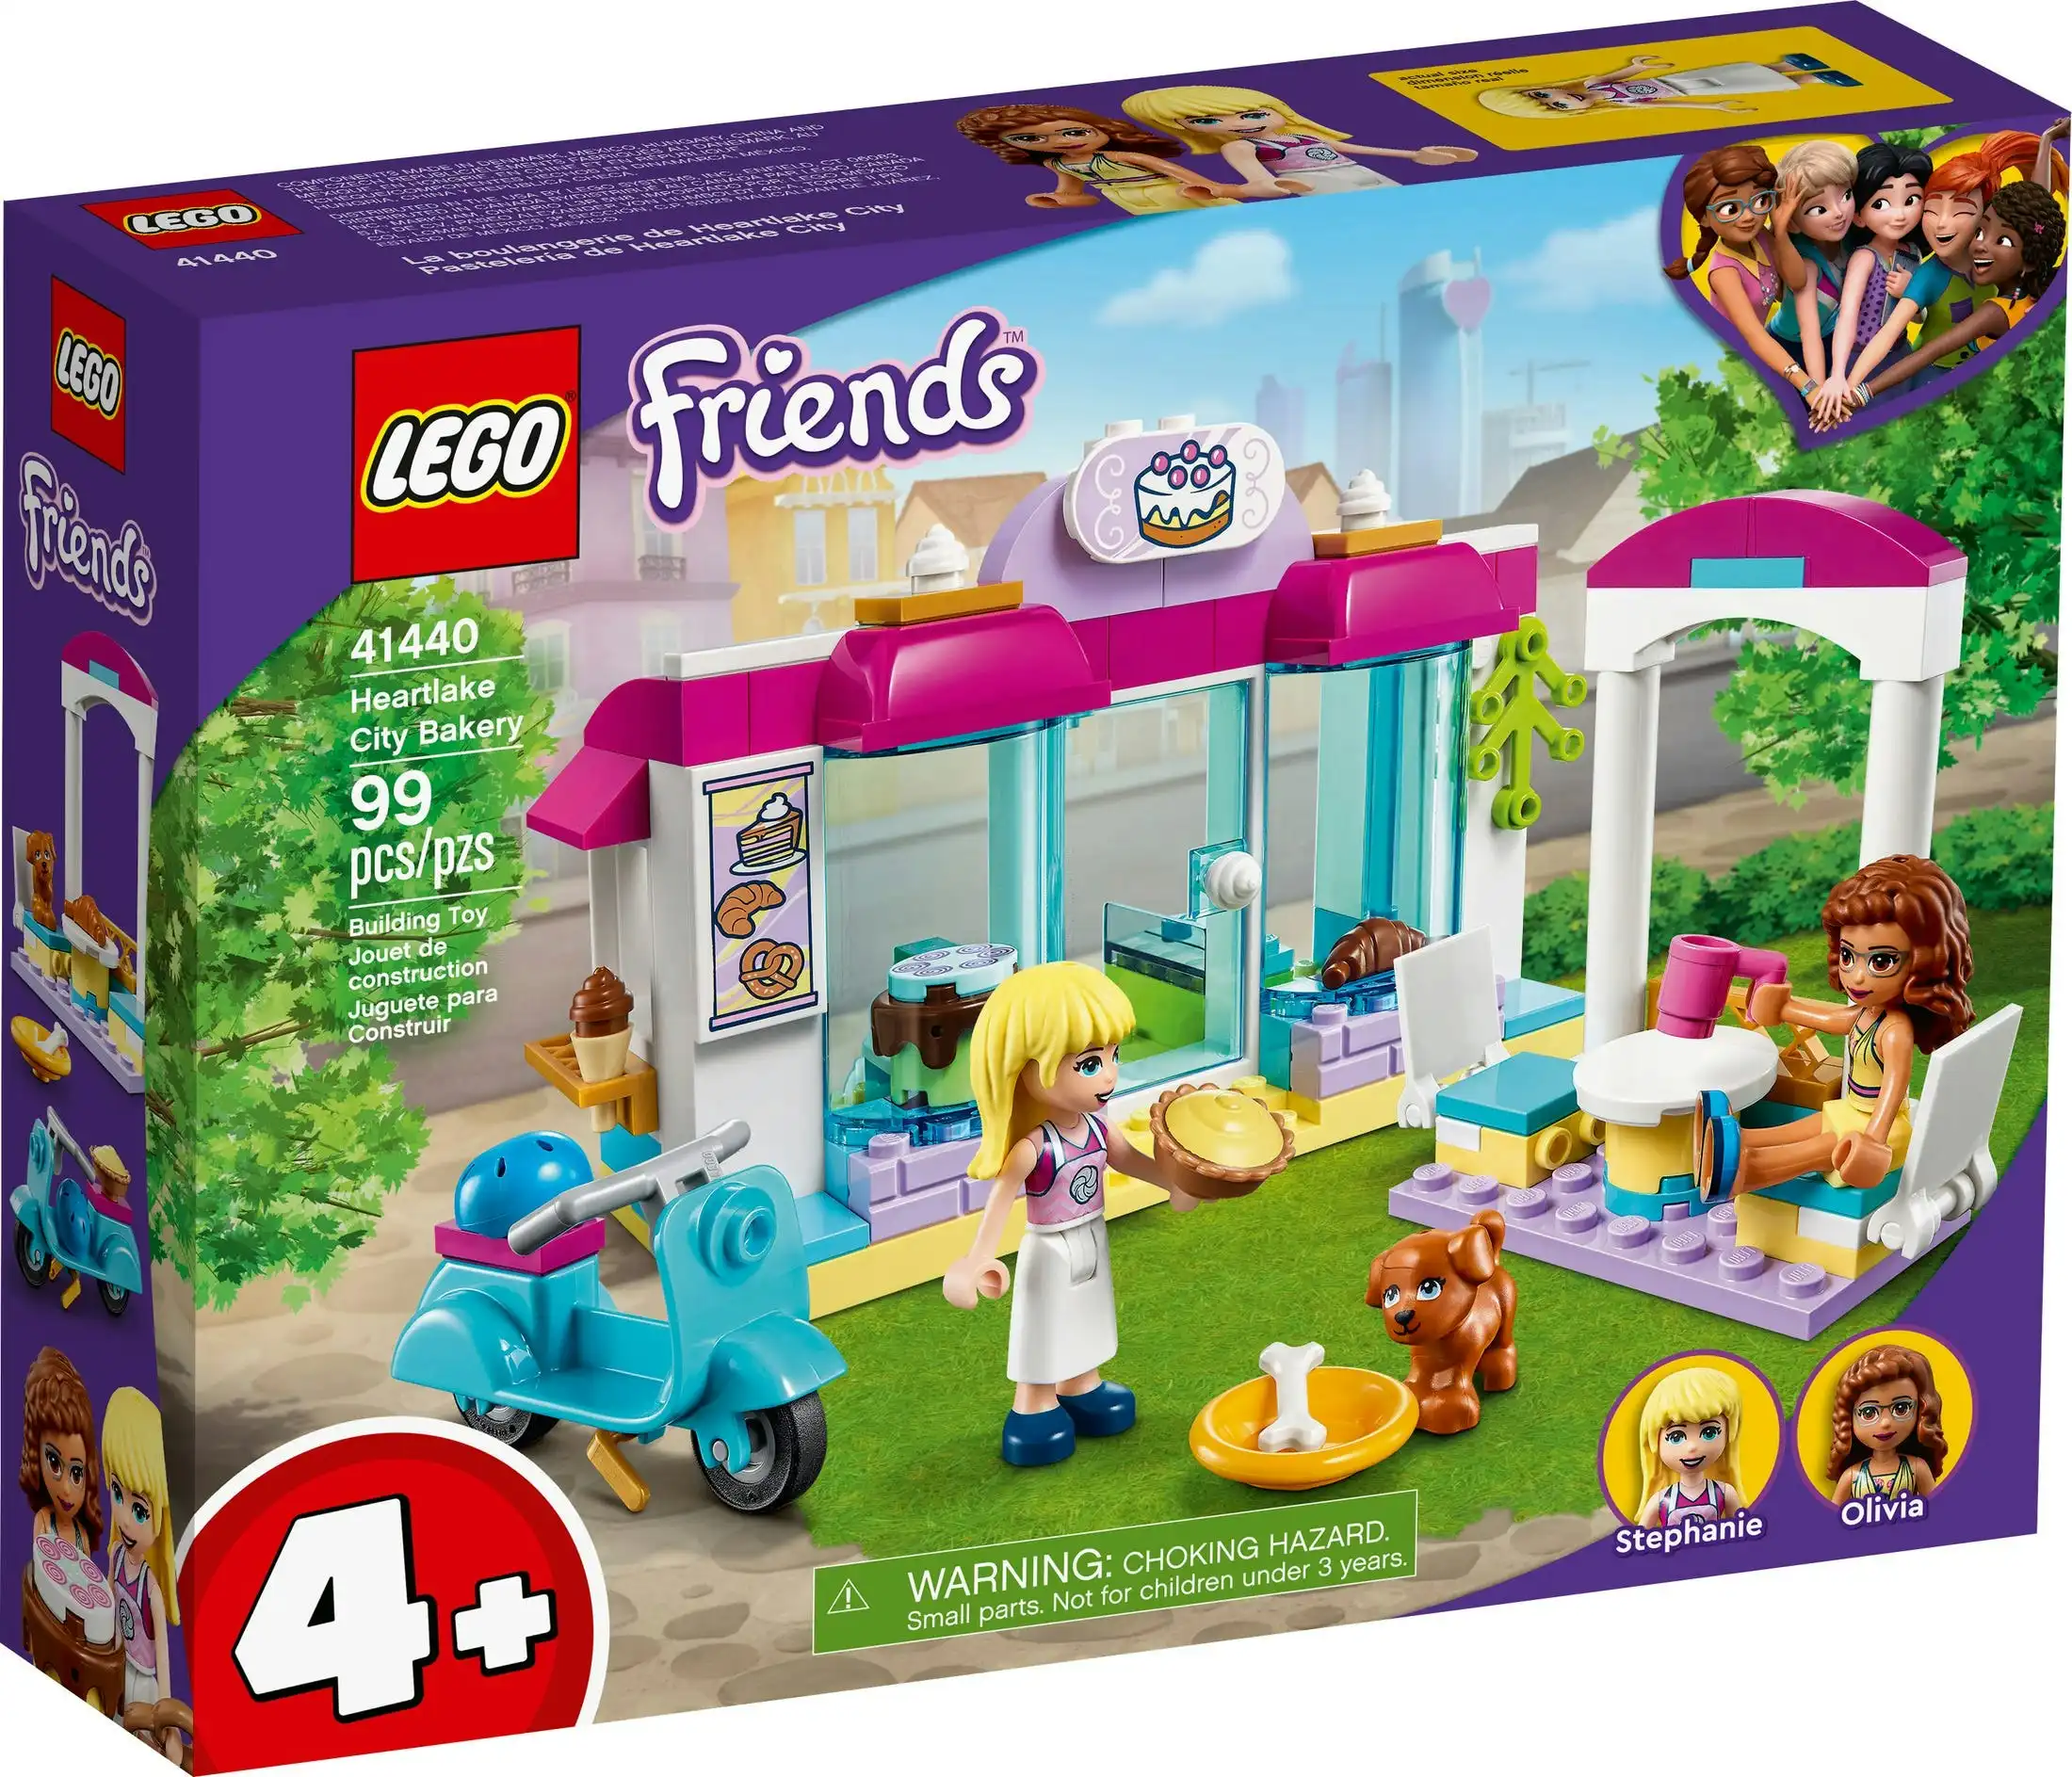 LEGO 41440 Heartlake City Bakery - Friends 4+